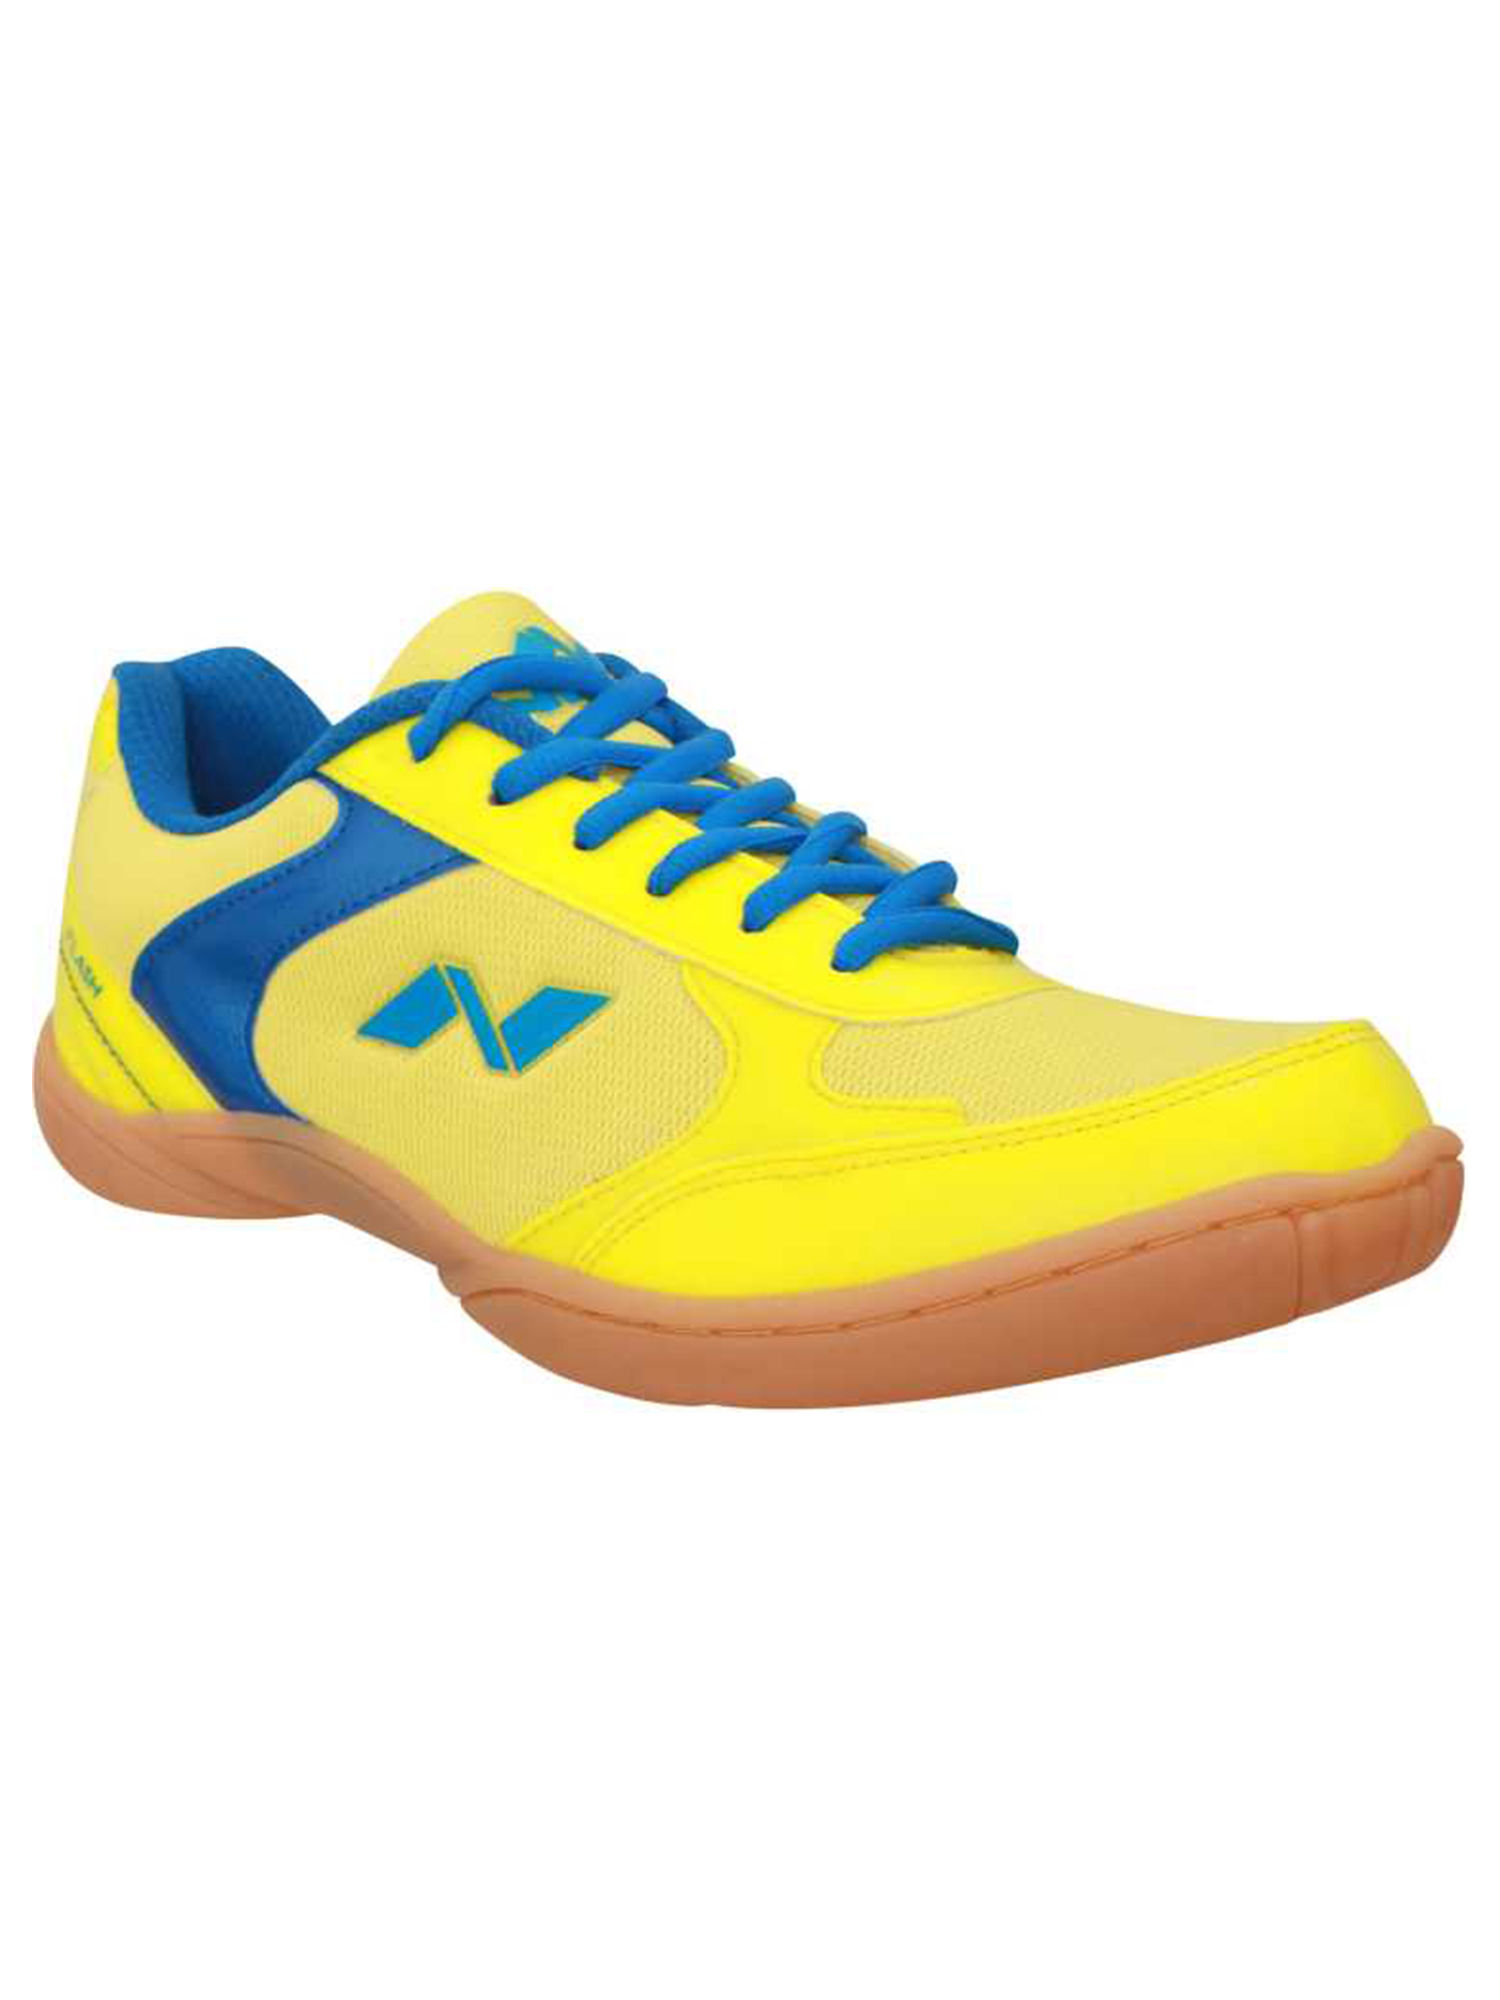 Discover more than 113 nivia badminton flash shoes latest